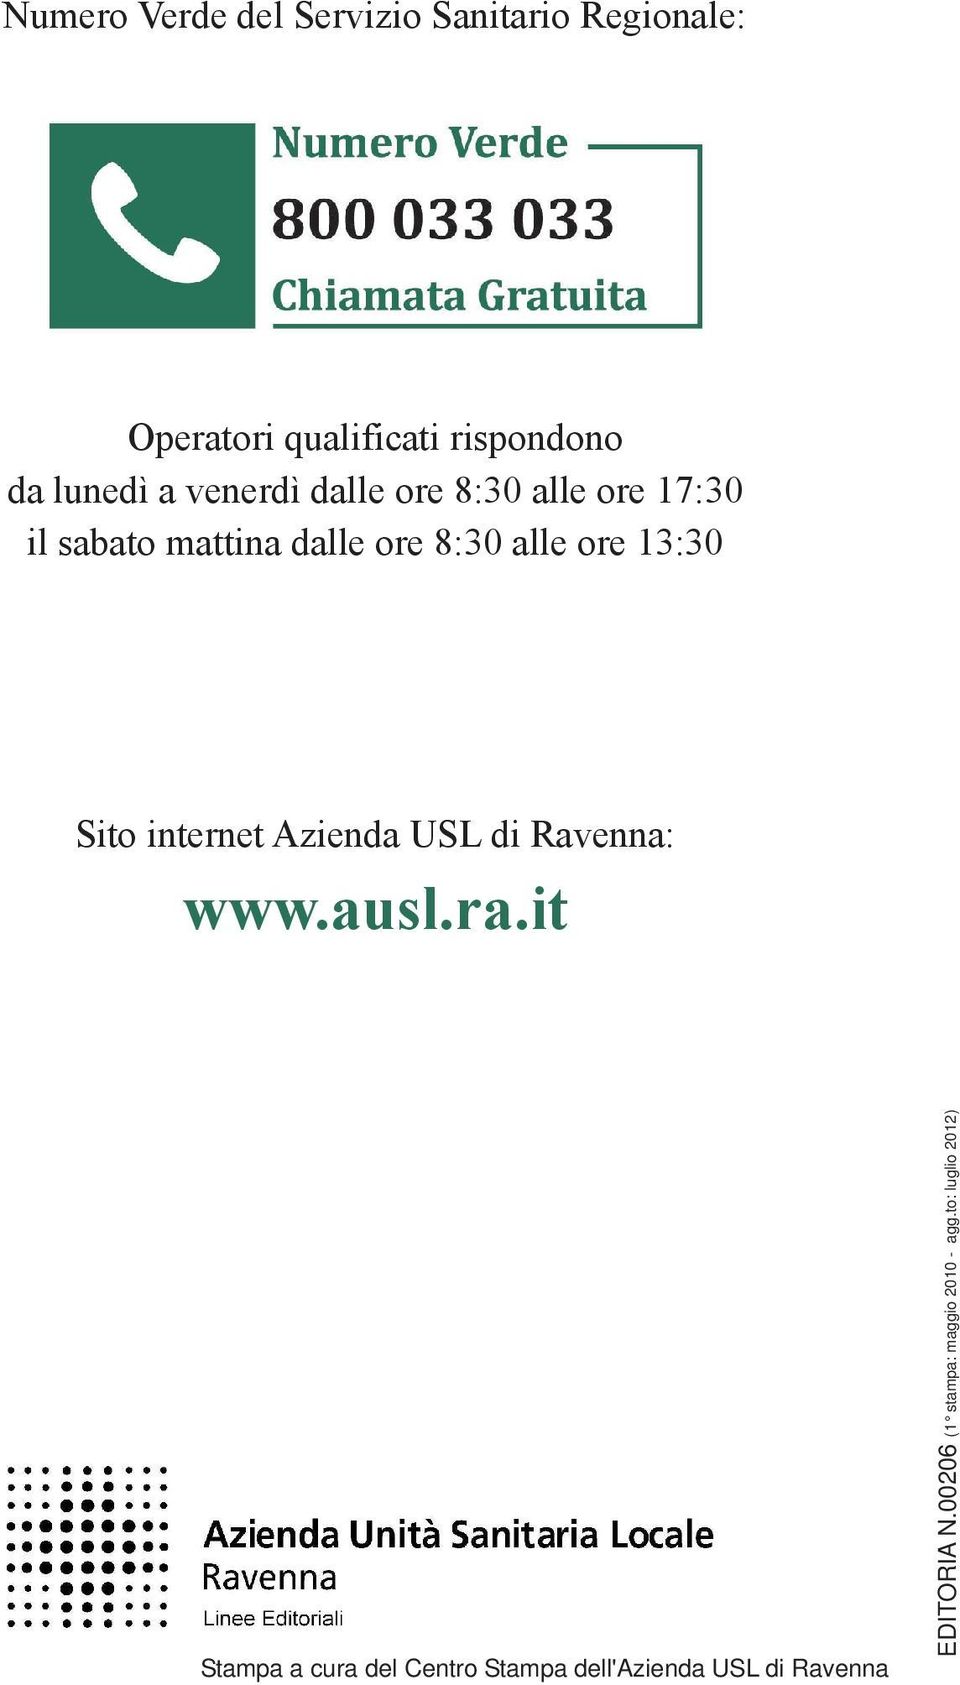 13:30 Sito internet Azienda USL di Ravenna: www.ausl.ra.